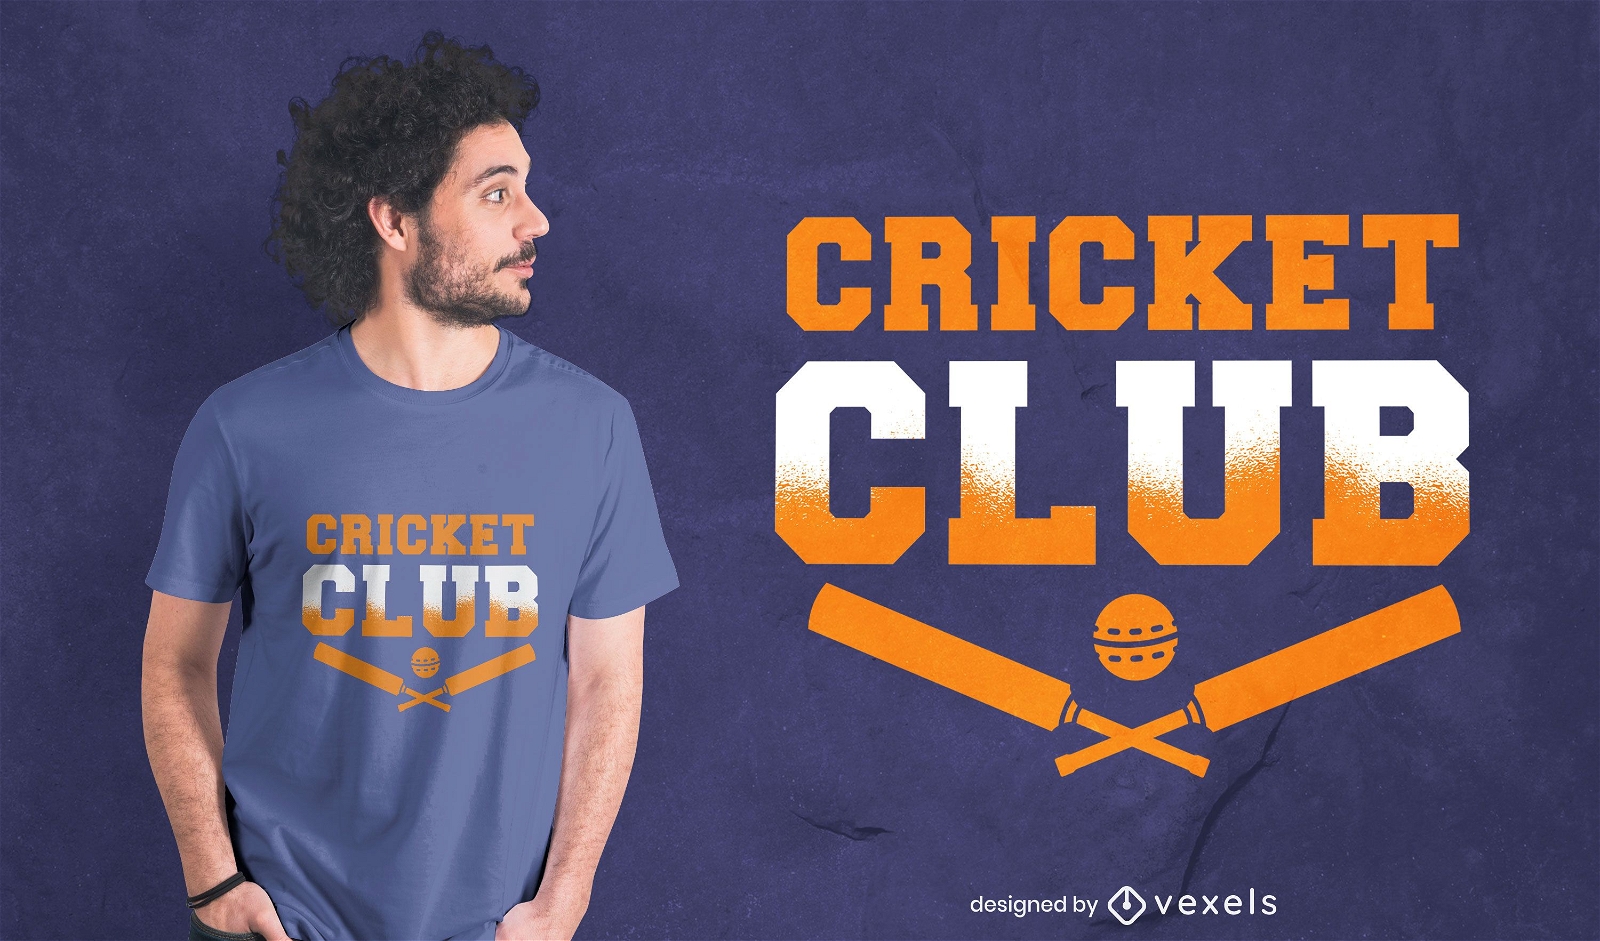 Cricket sport club quote t-shirt design